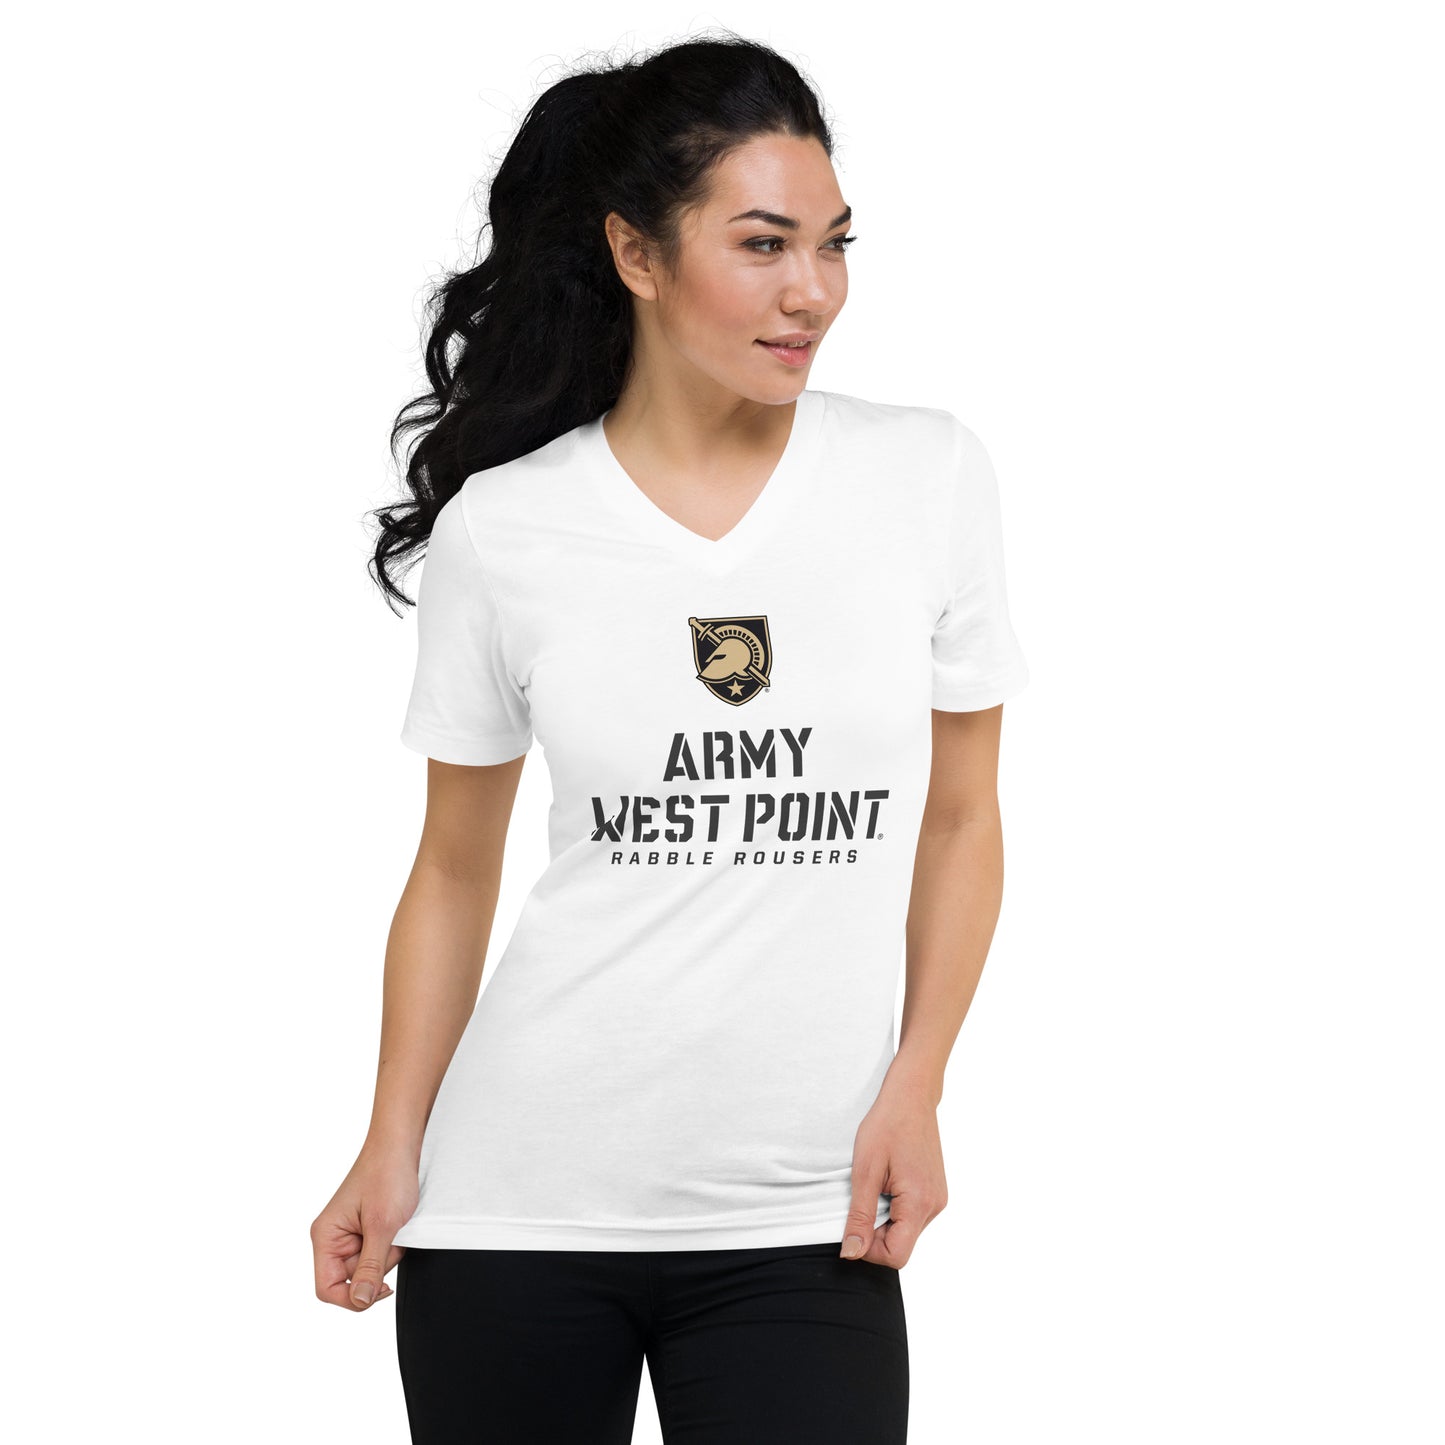 Army West Point Rabble Rousers Unisex Short Sleeve V-Neck T-Shirt (White)